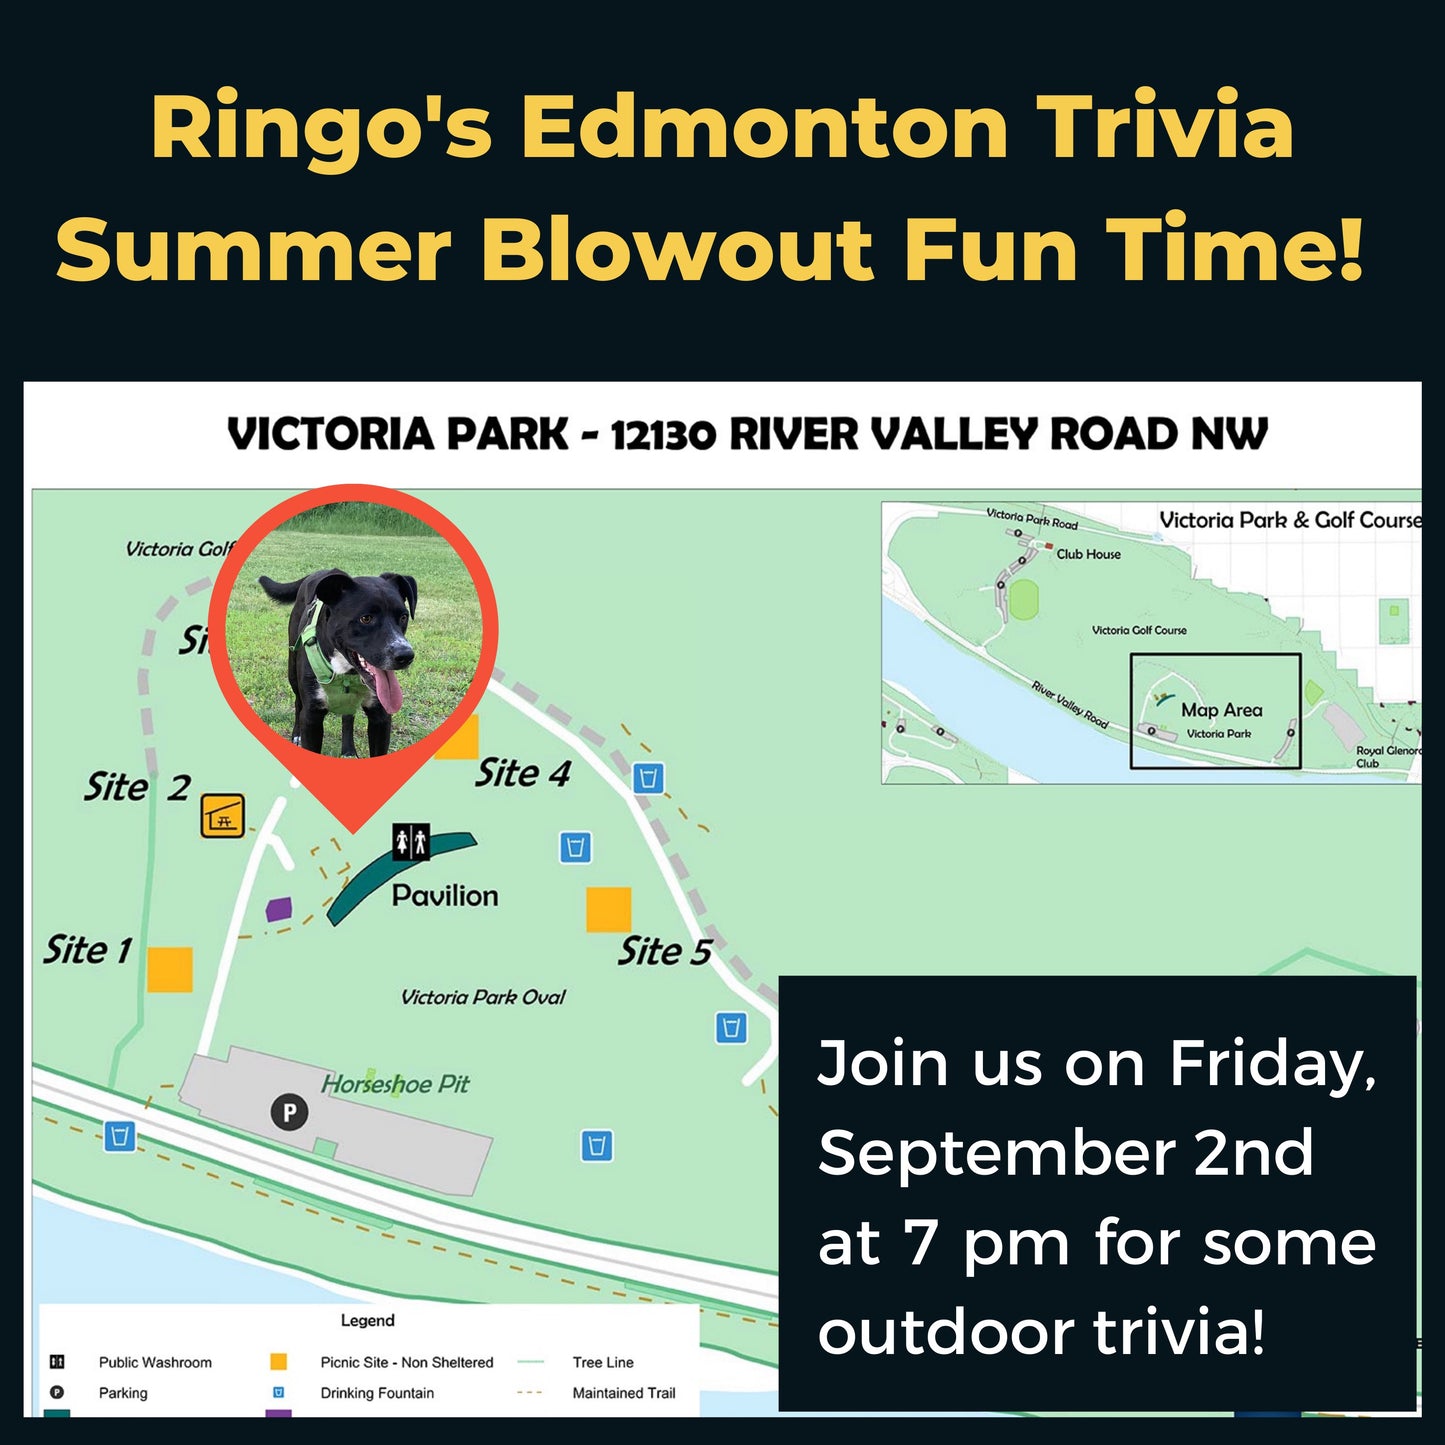 Ringo's Edmonton Trivia Summer Blowout Fun Time